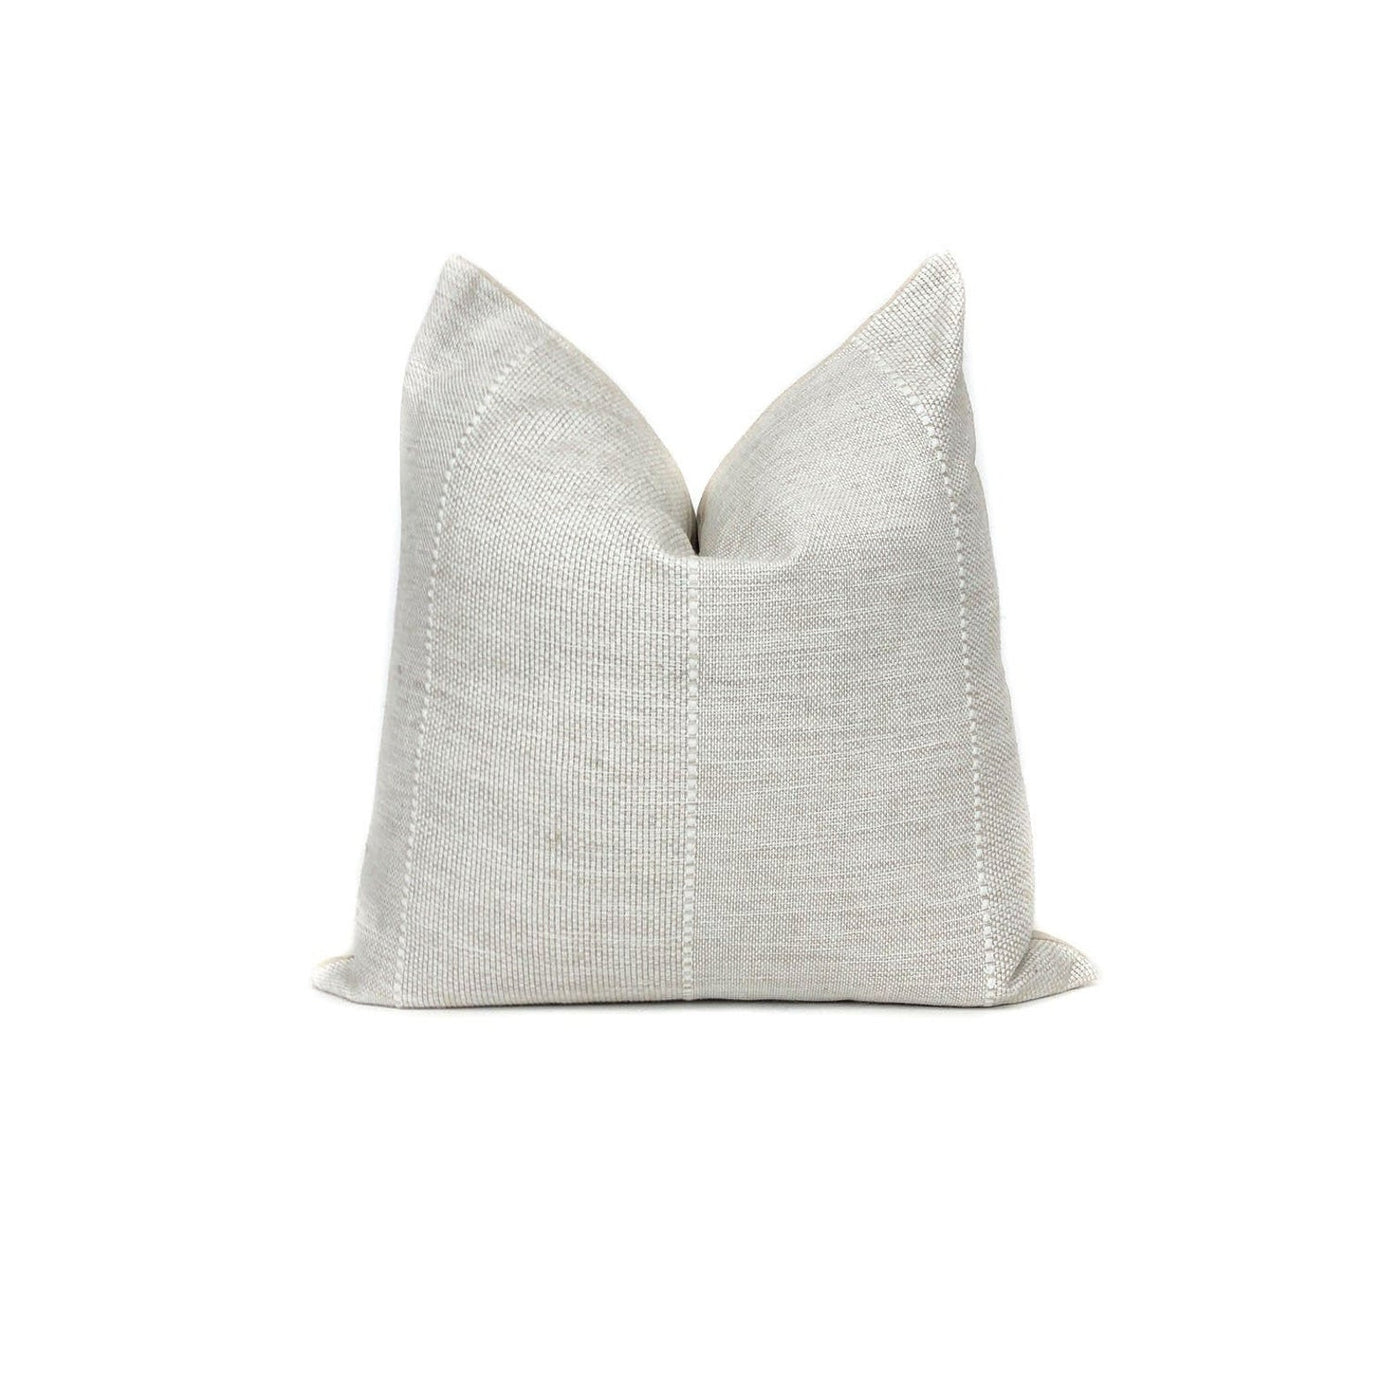 Malibu Pillow Set  6 Pillow Covers – ONE AFFIRMATION